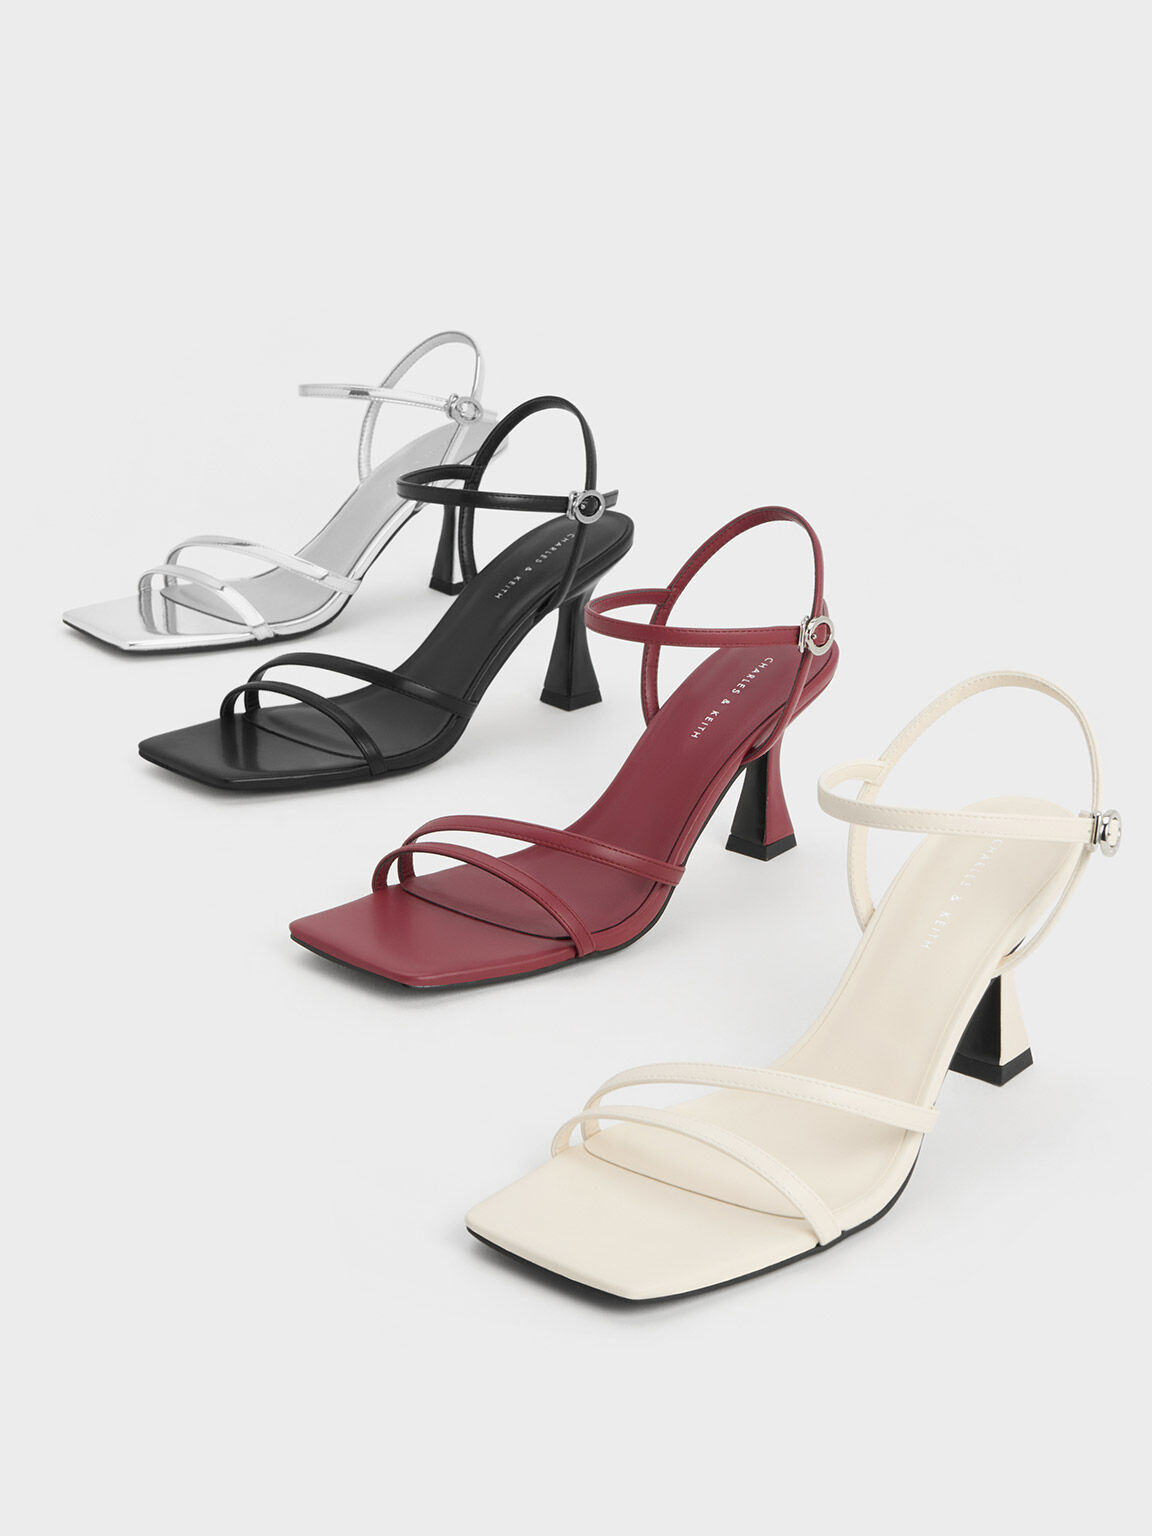 Sonar S Lo  Strappy sandals, Metallic heels, Upper leather